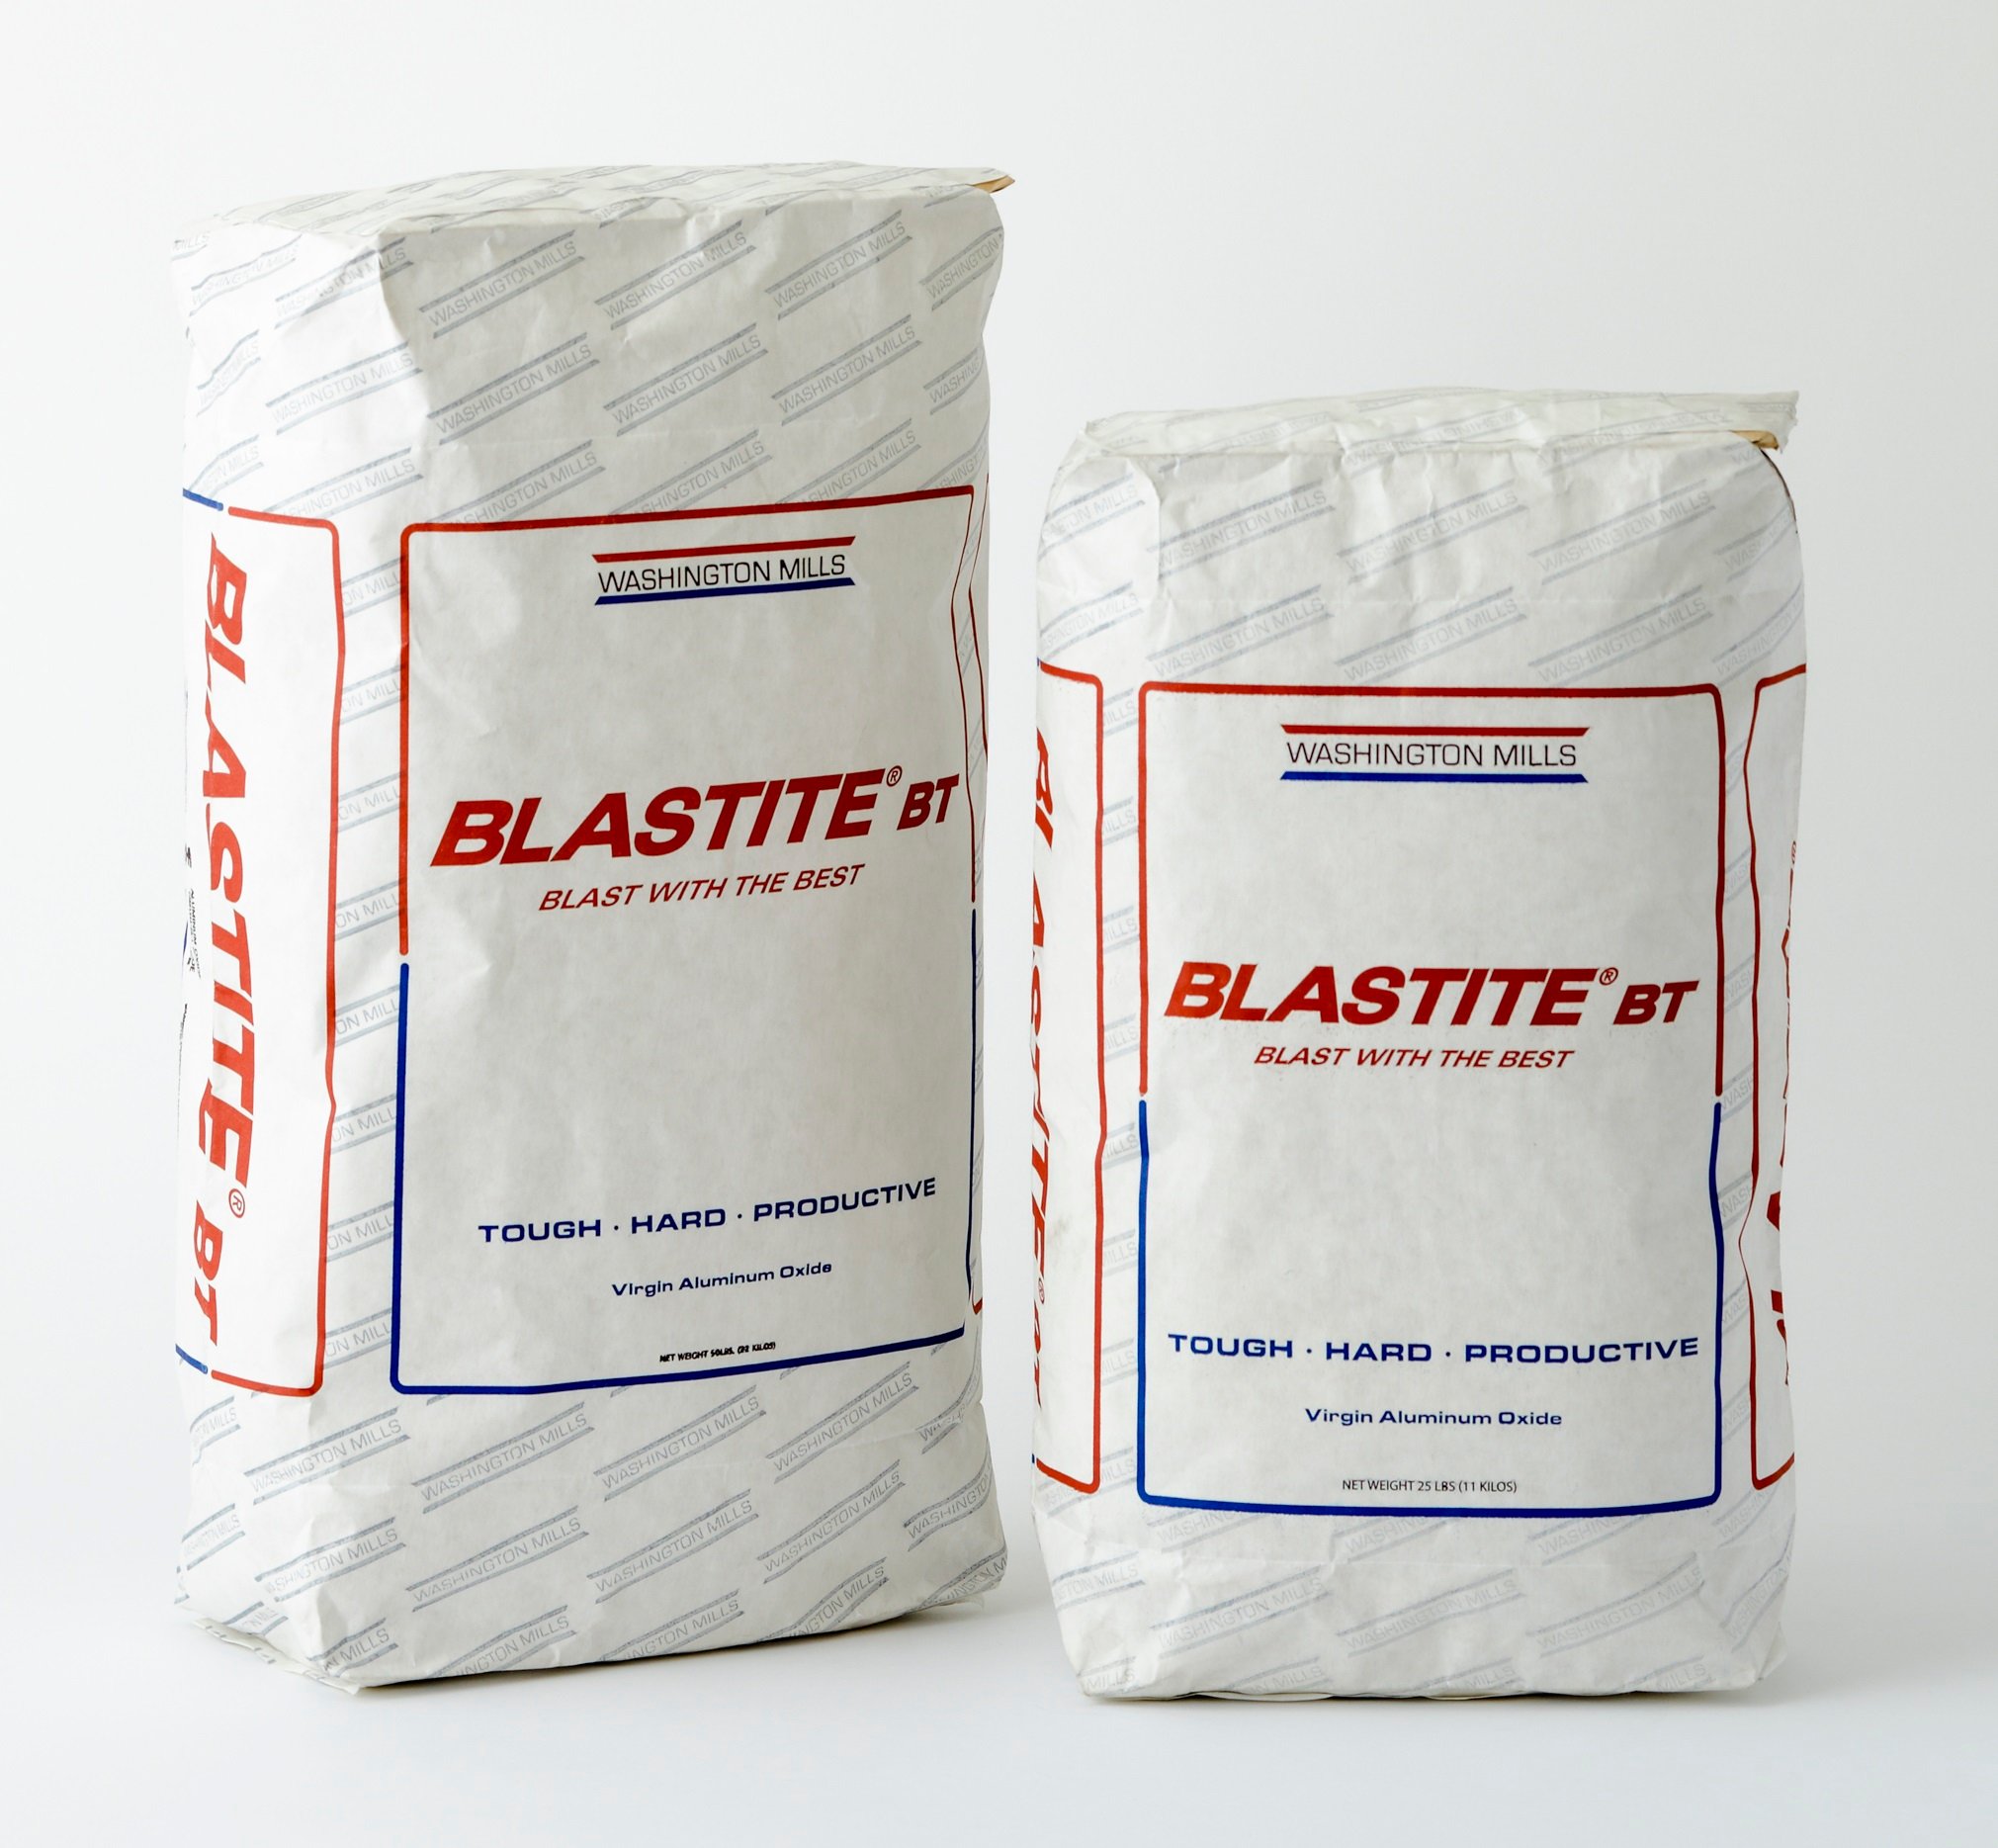 Blastite brown aluminum oxide from Washington Mills